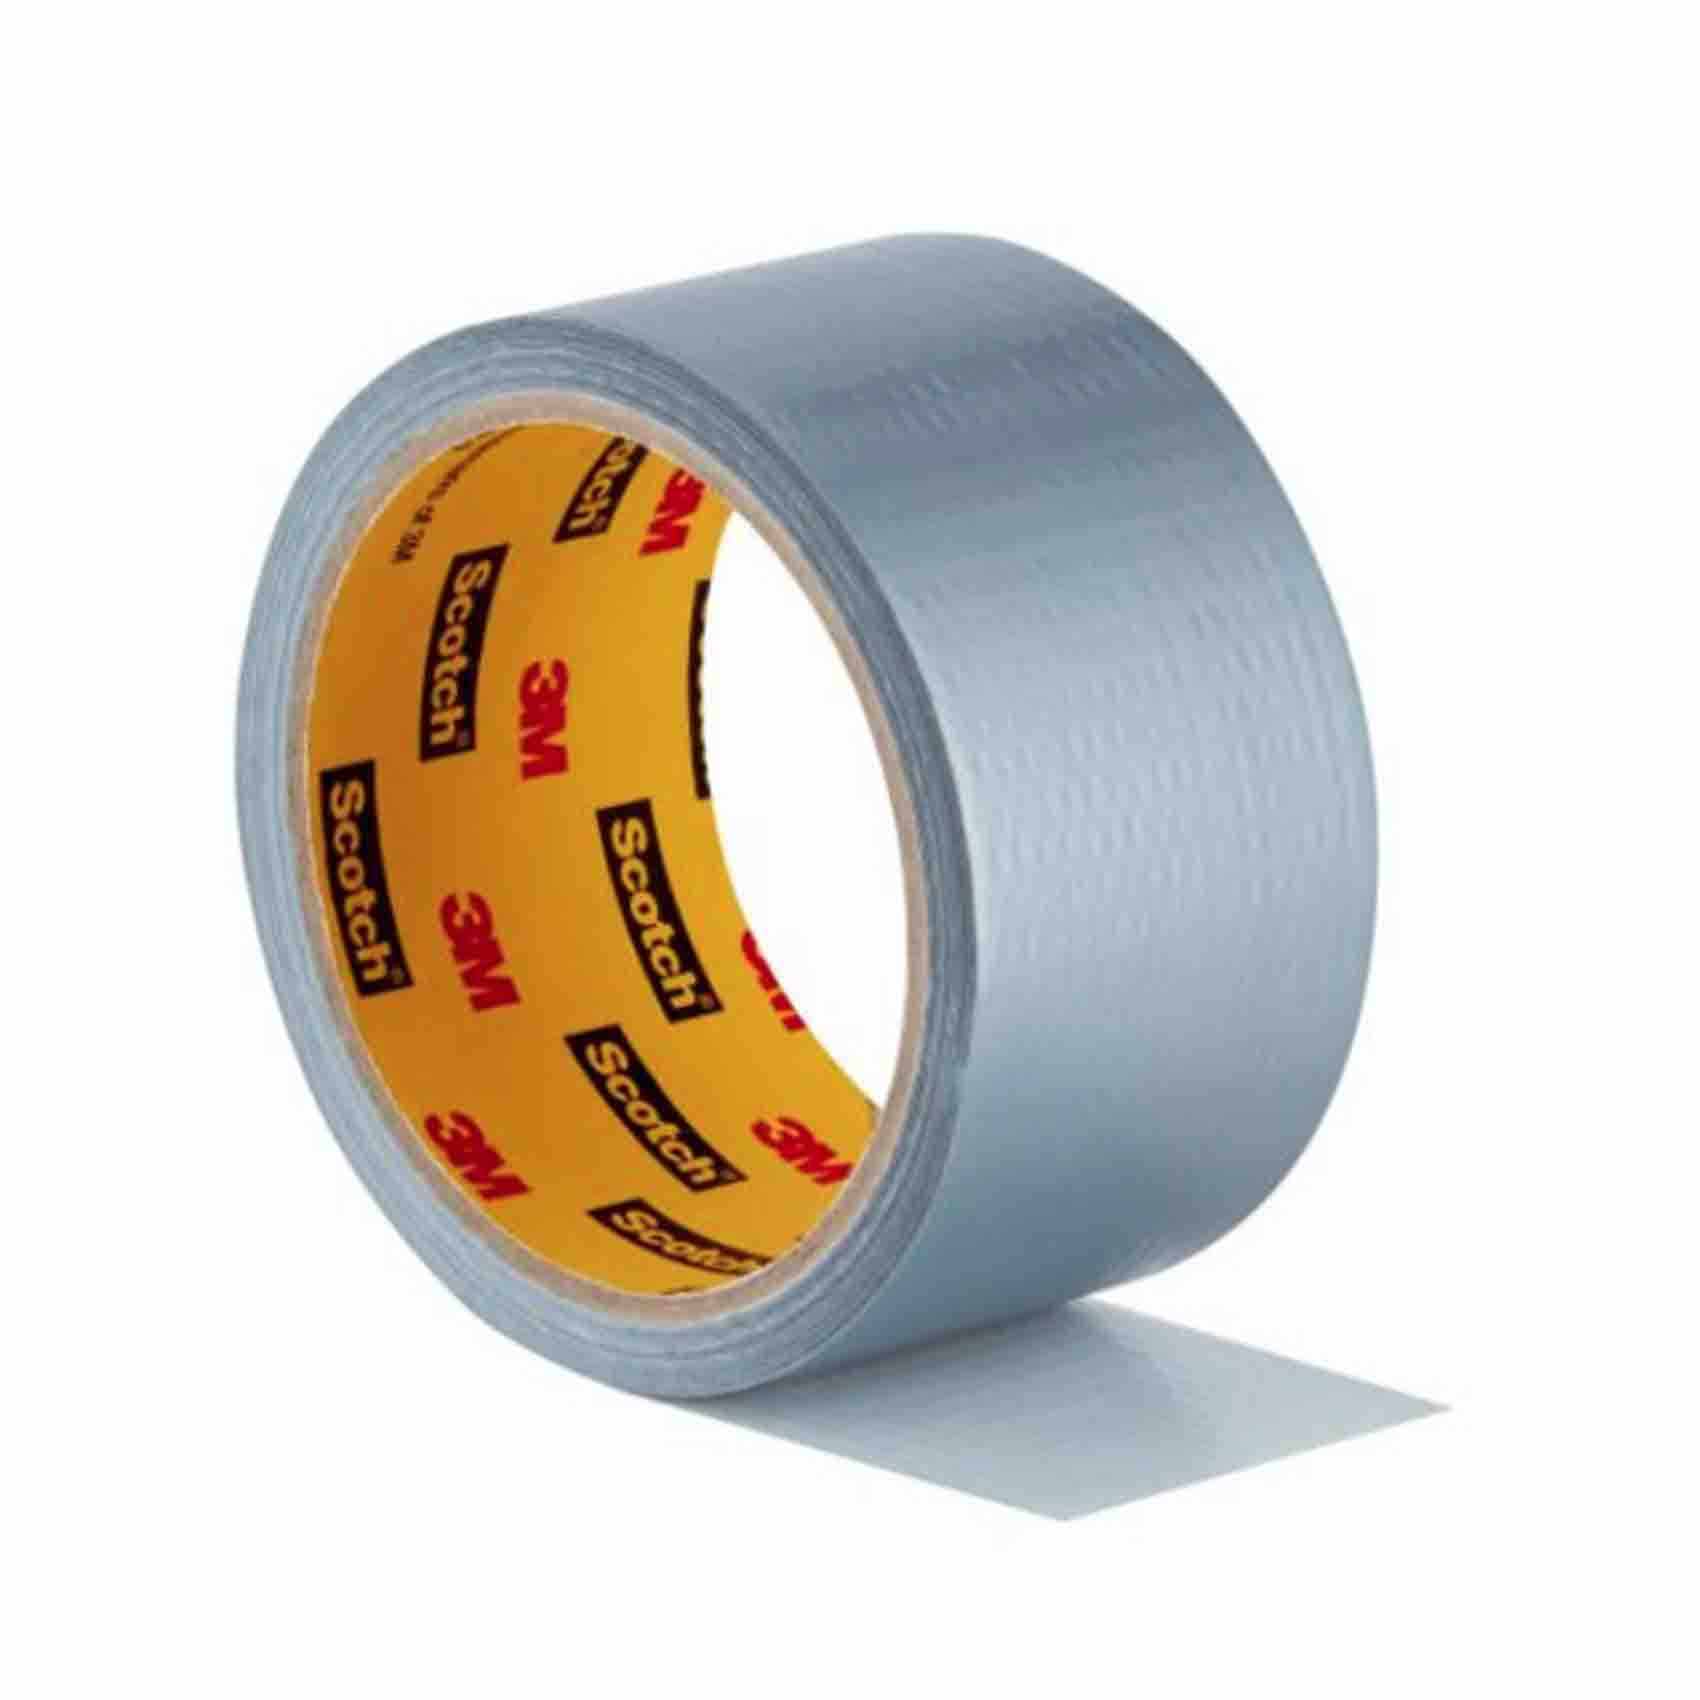 Scotch® Universal Duct Tape, Silver 2904, 48 mm x 25 m, 2 Rolls